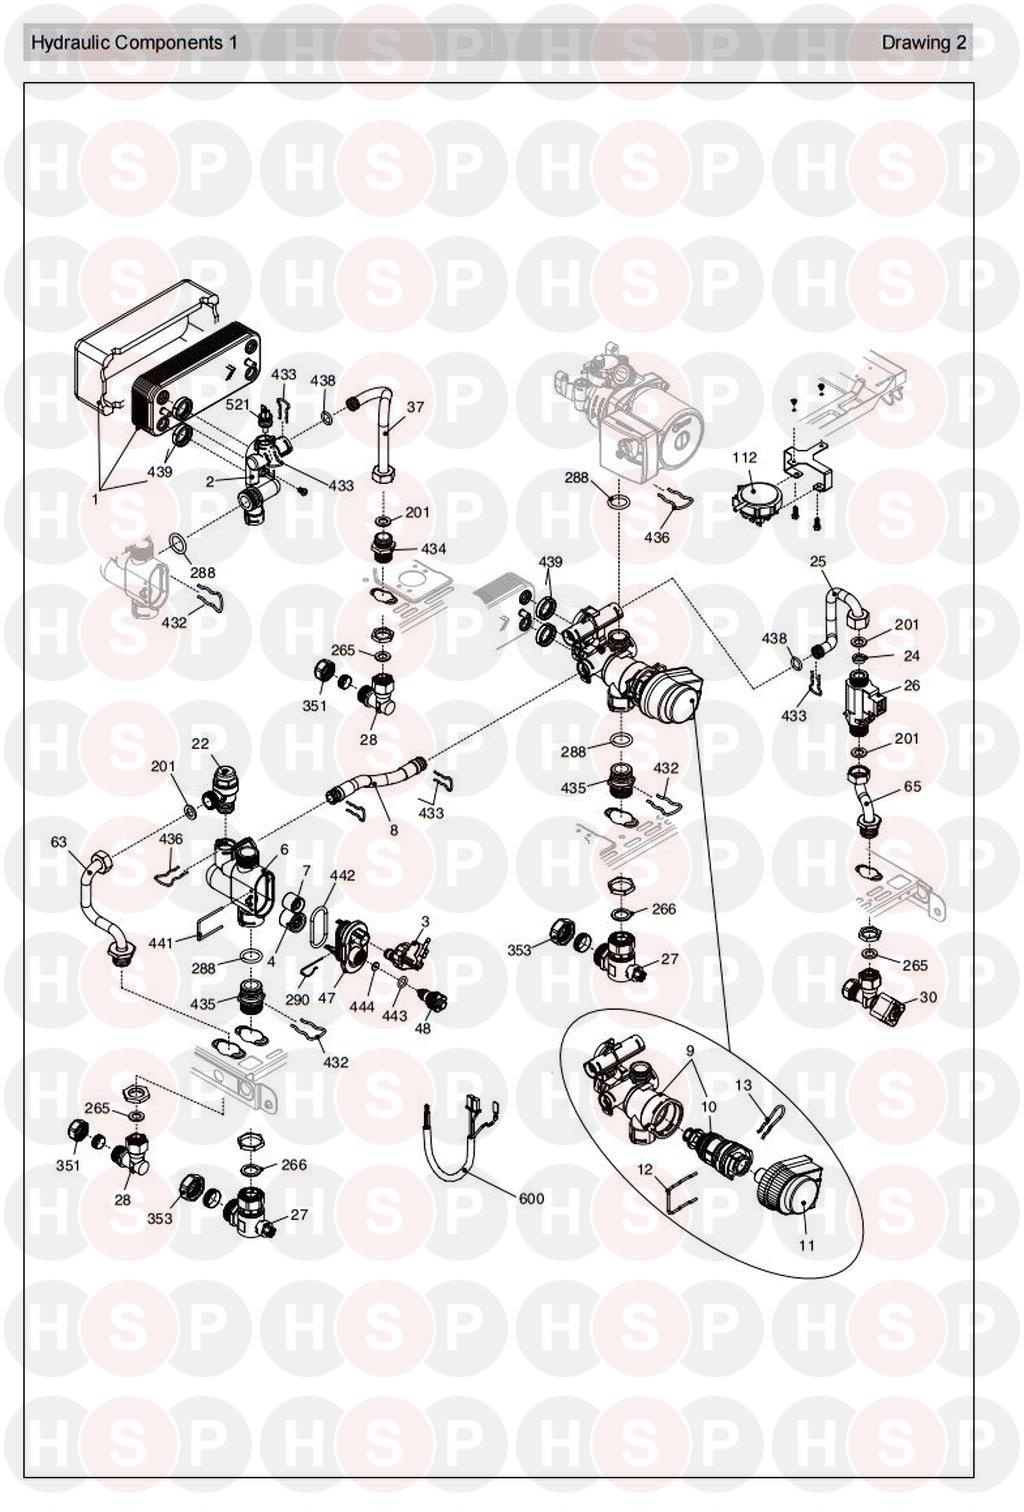 Hydraulics 1 diagram for Vokera Procombi 85HE Rev 4 (03/2010)